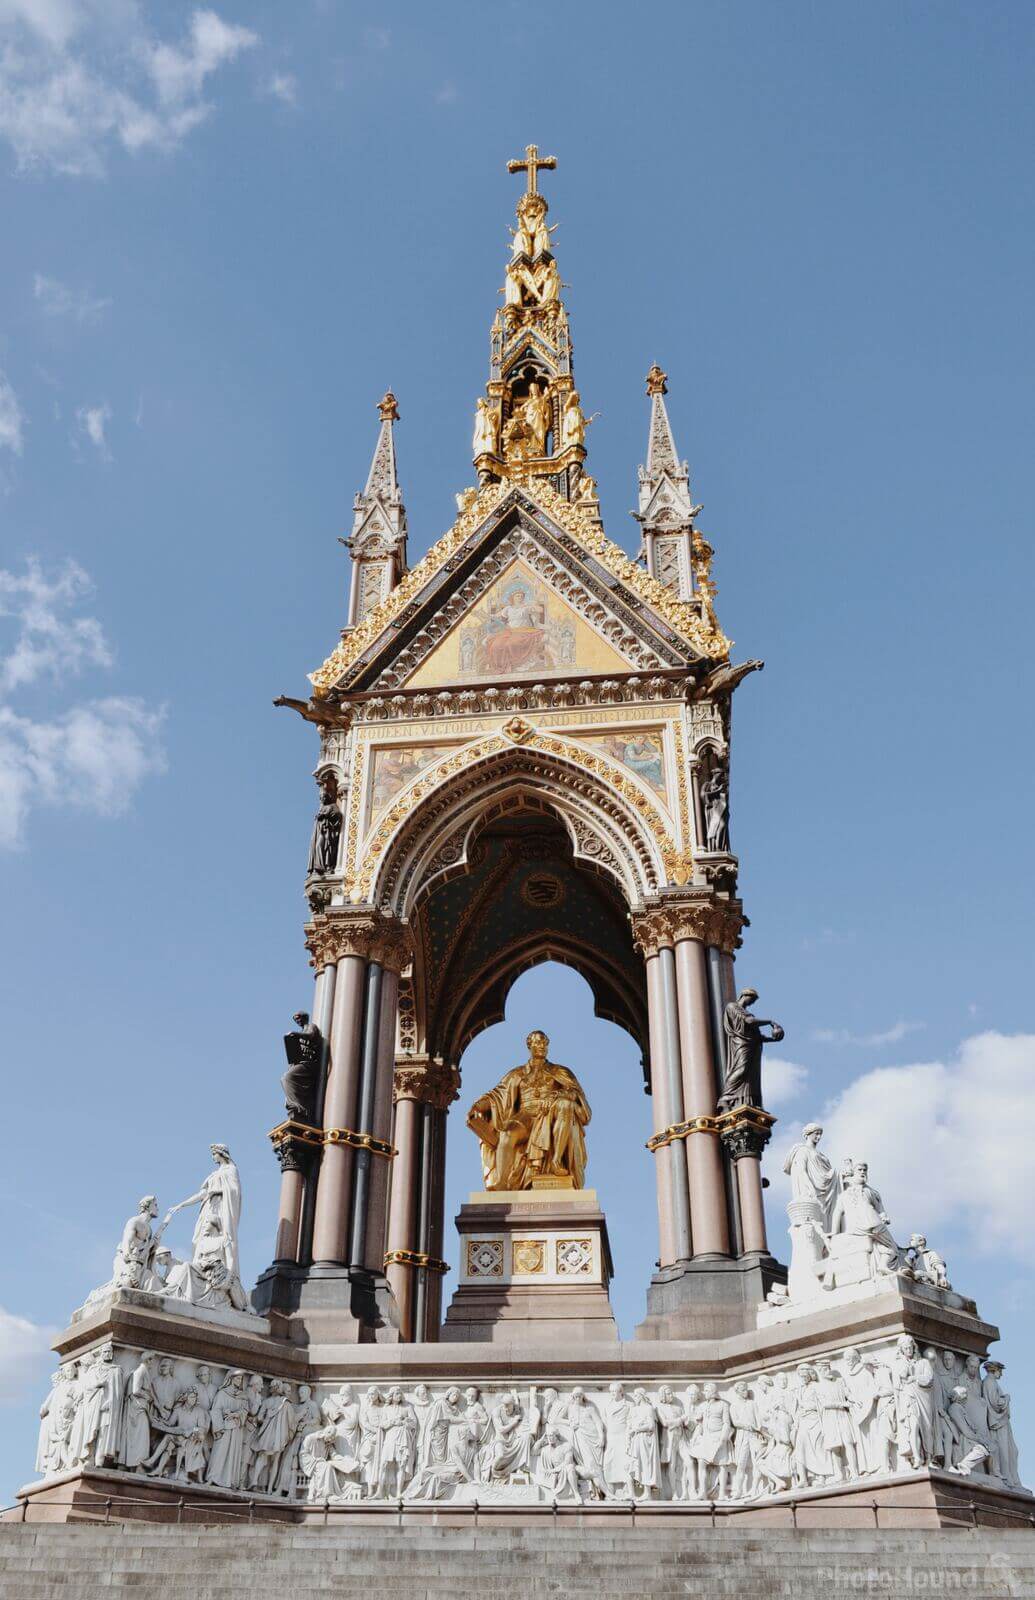 Image of The Albert Memorial, Kensington Gardens by Team PhotoHound